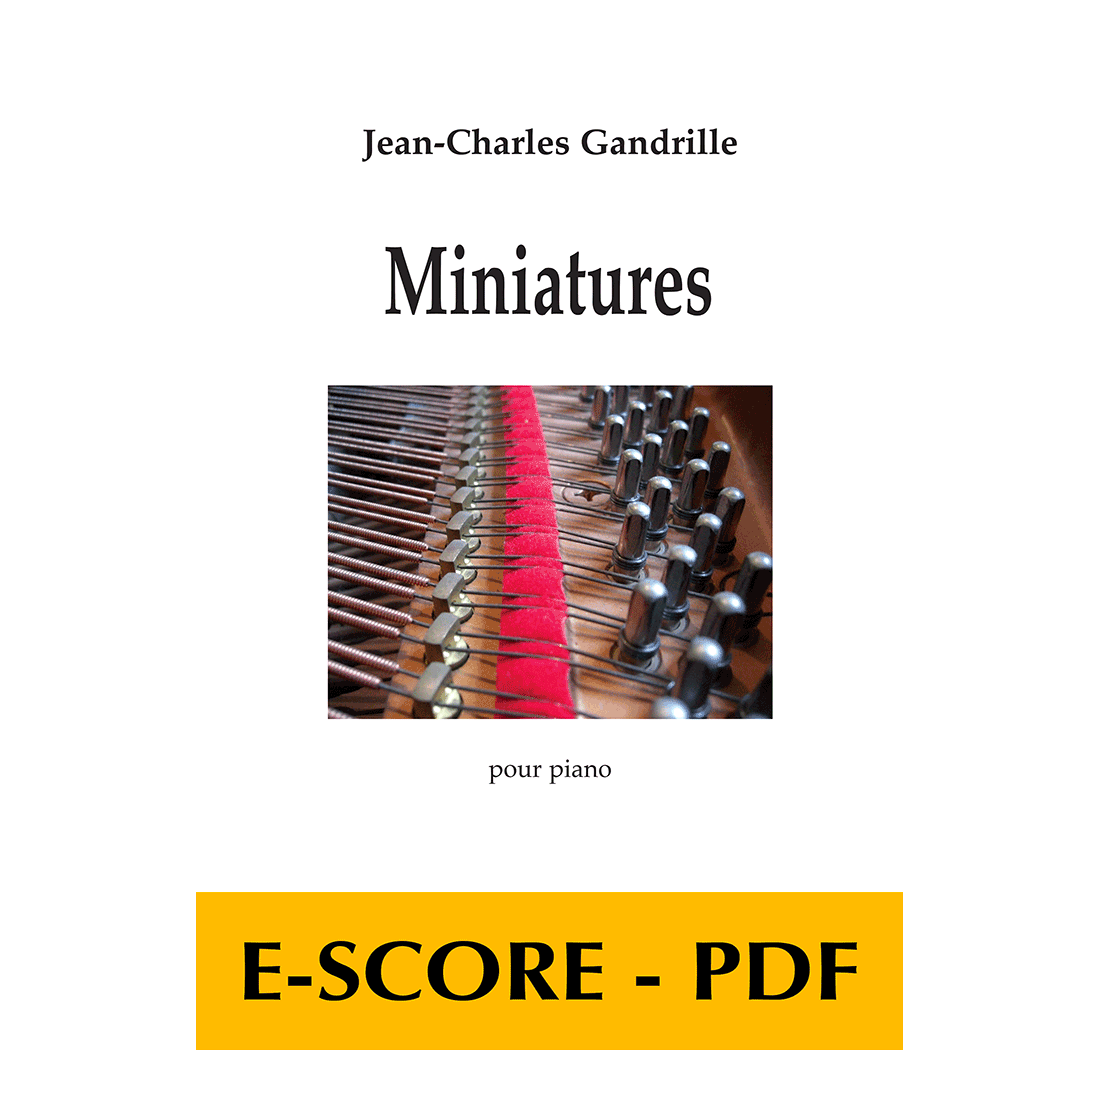 Miniatures pour piano - E-SCORE PDF